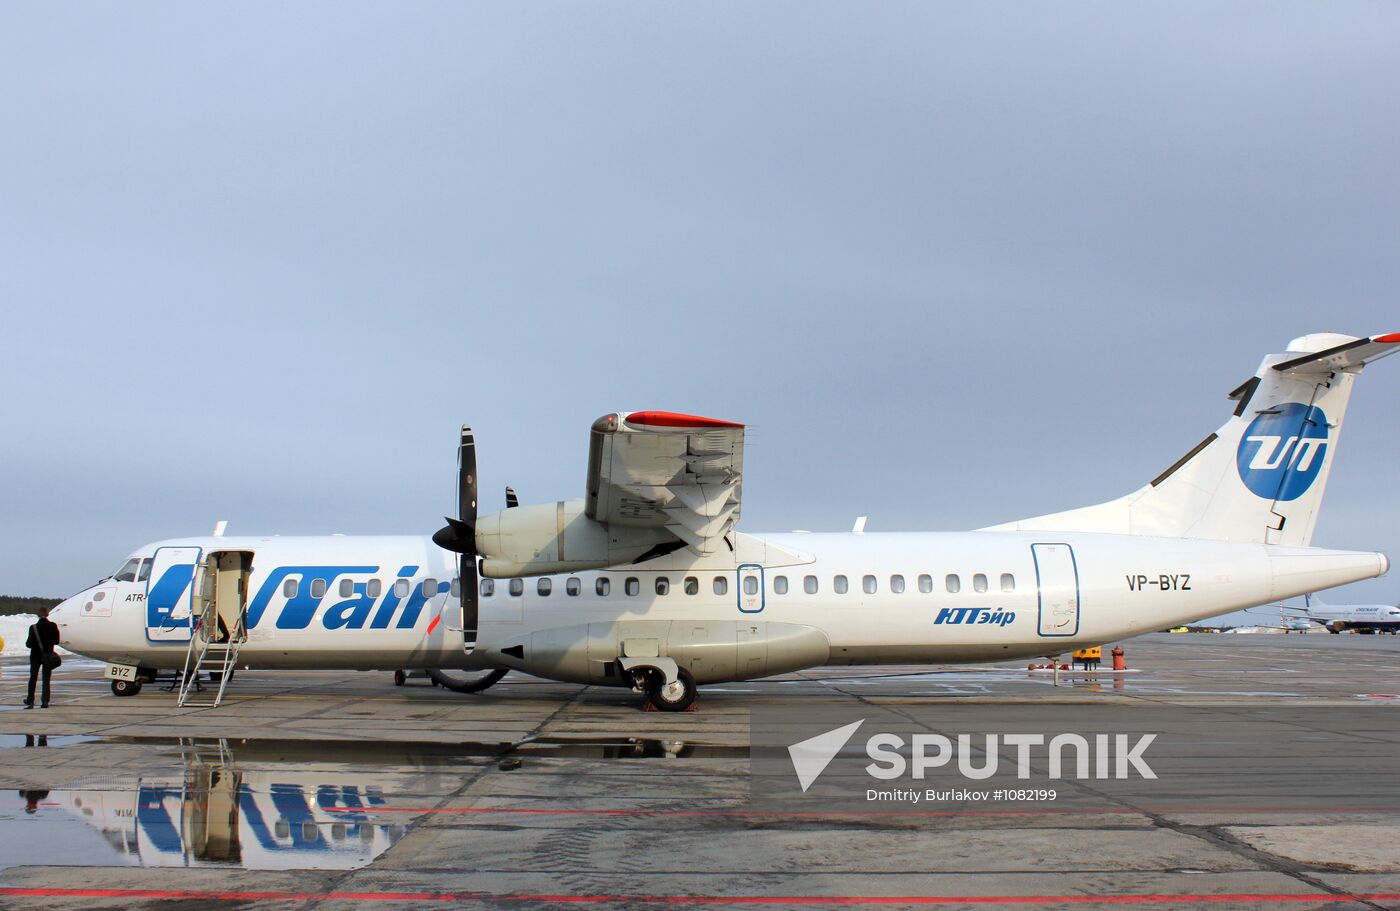 ATR-72 aircraft on Surgut airport runway